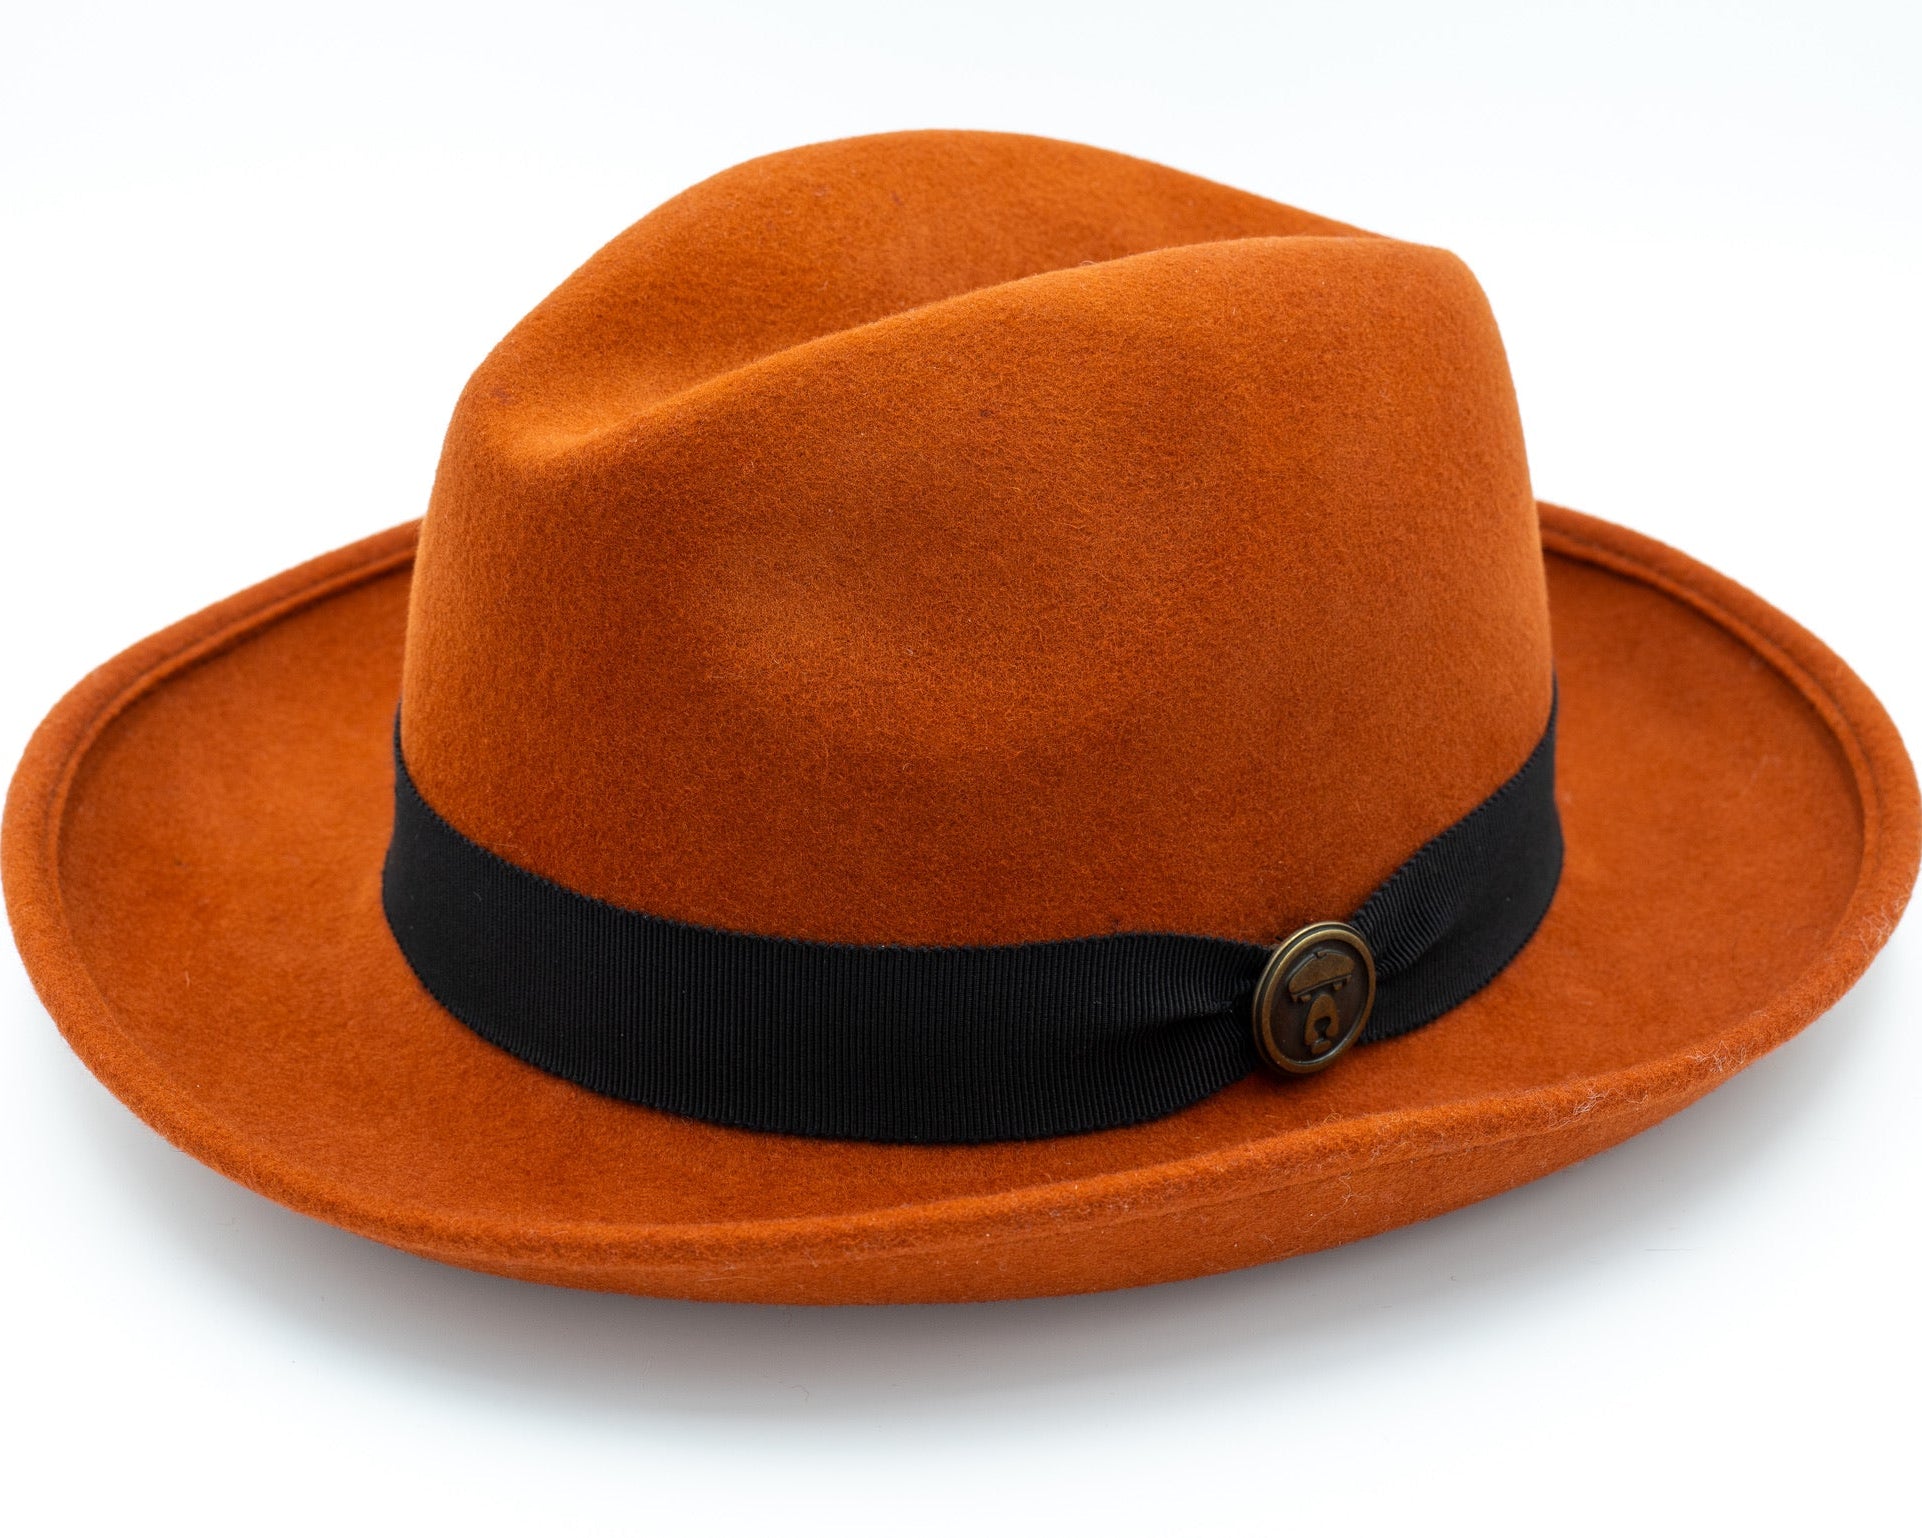 Orangebearstl Fedora Hat in red brick color side